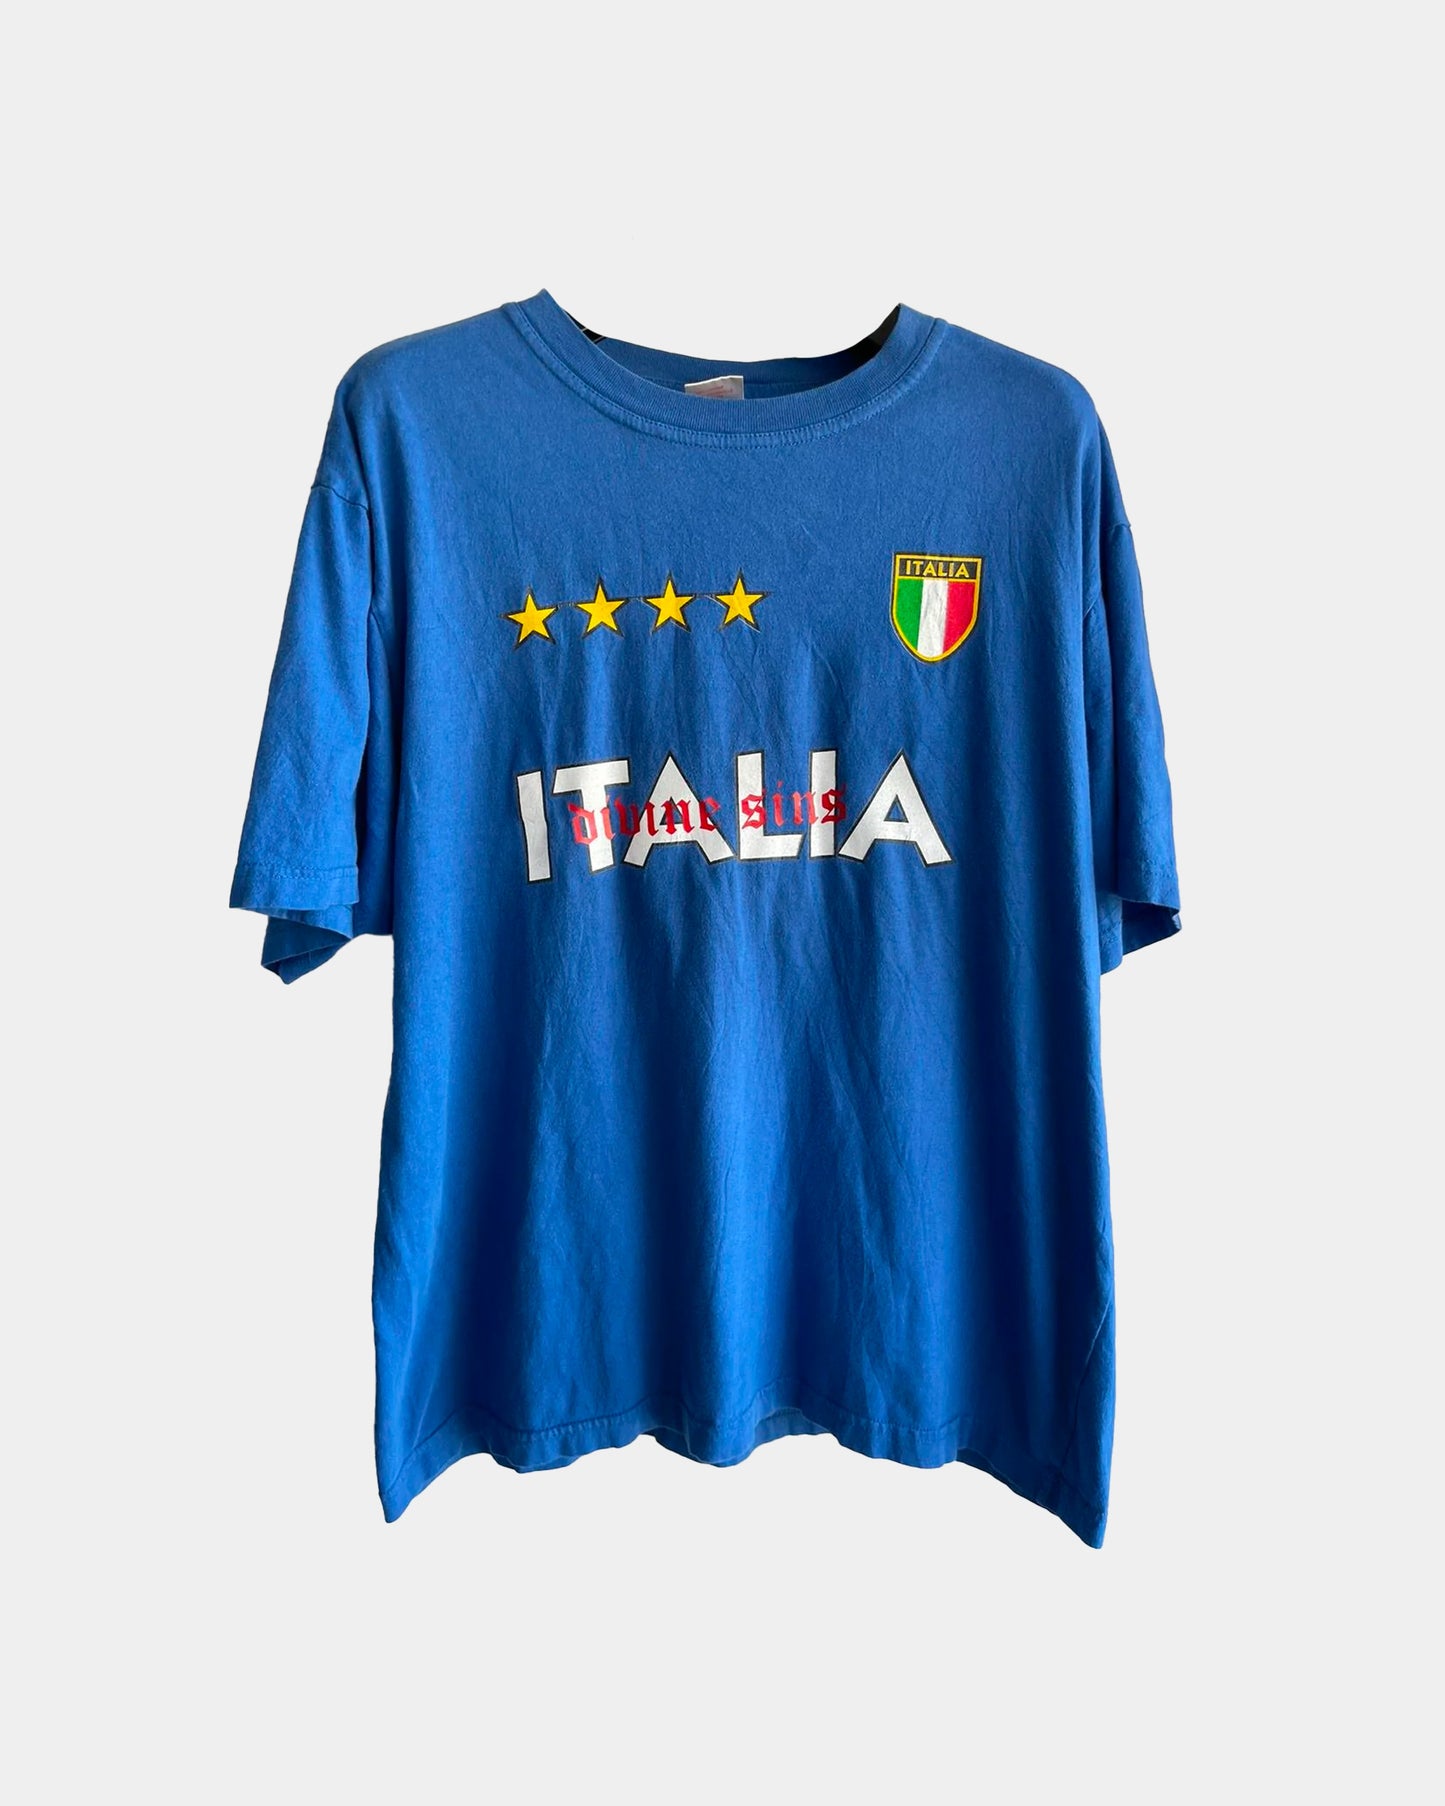 Vintage Italia Soccer Football X DIVINE SINS NYC Shirt